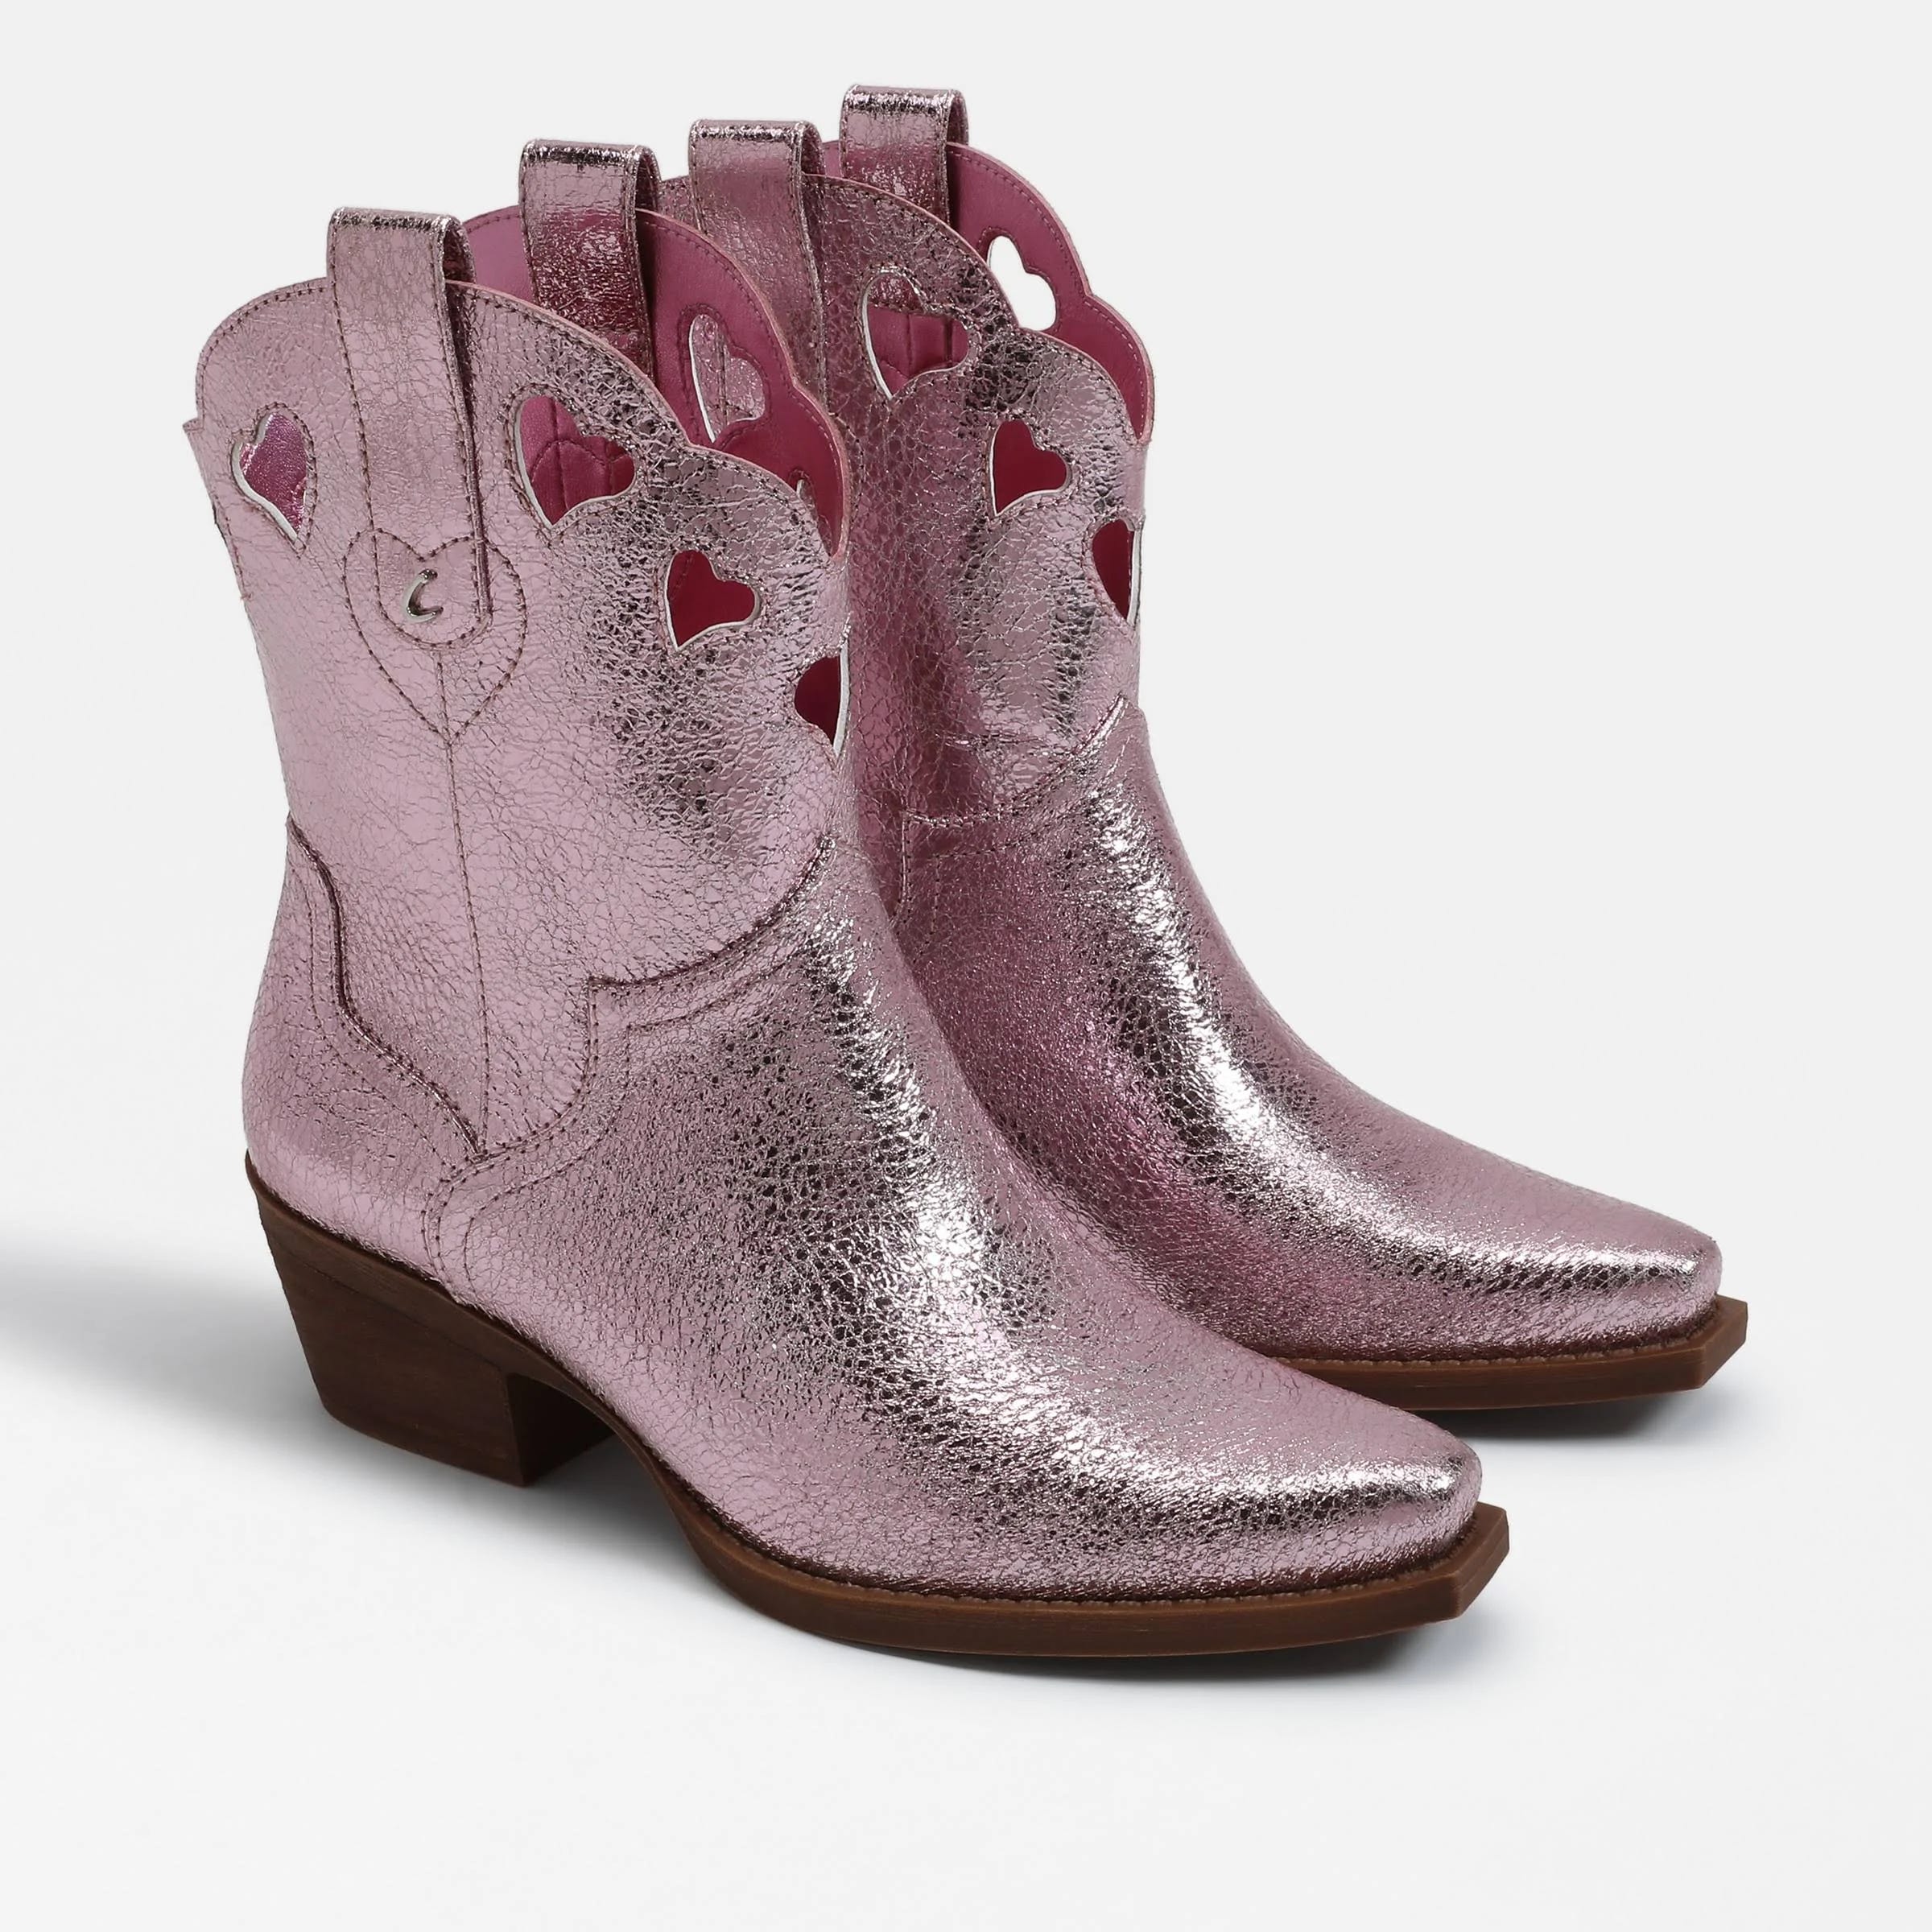 Fashionable Circular NY Jadia Western Boots for Women | Image